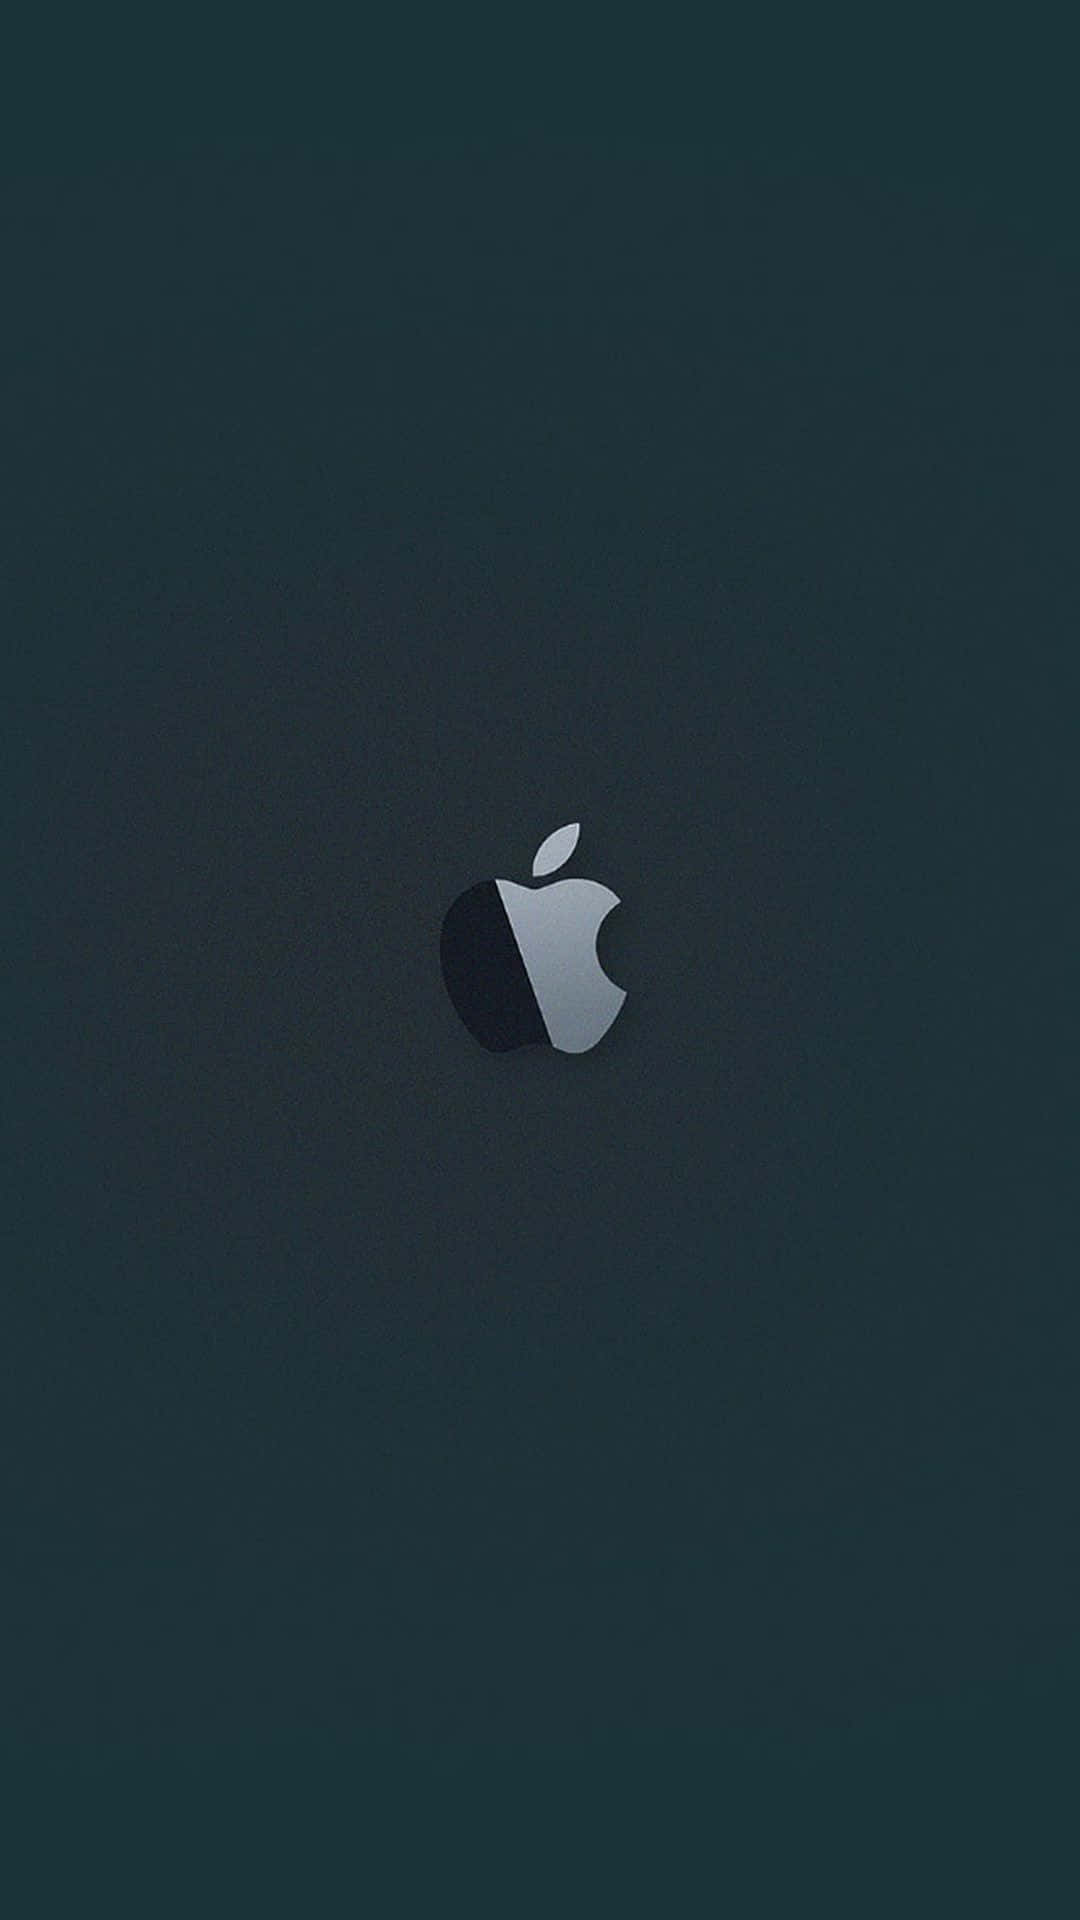 Eye Catching Iphone X Apple Background